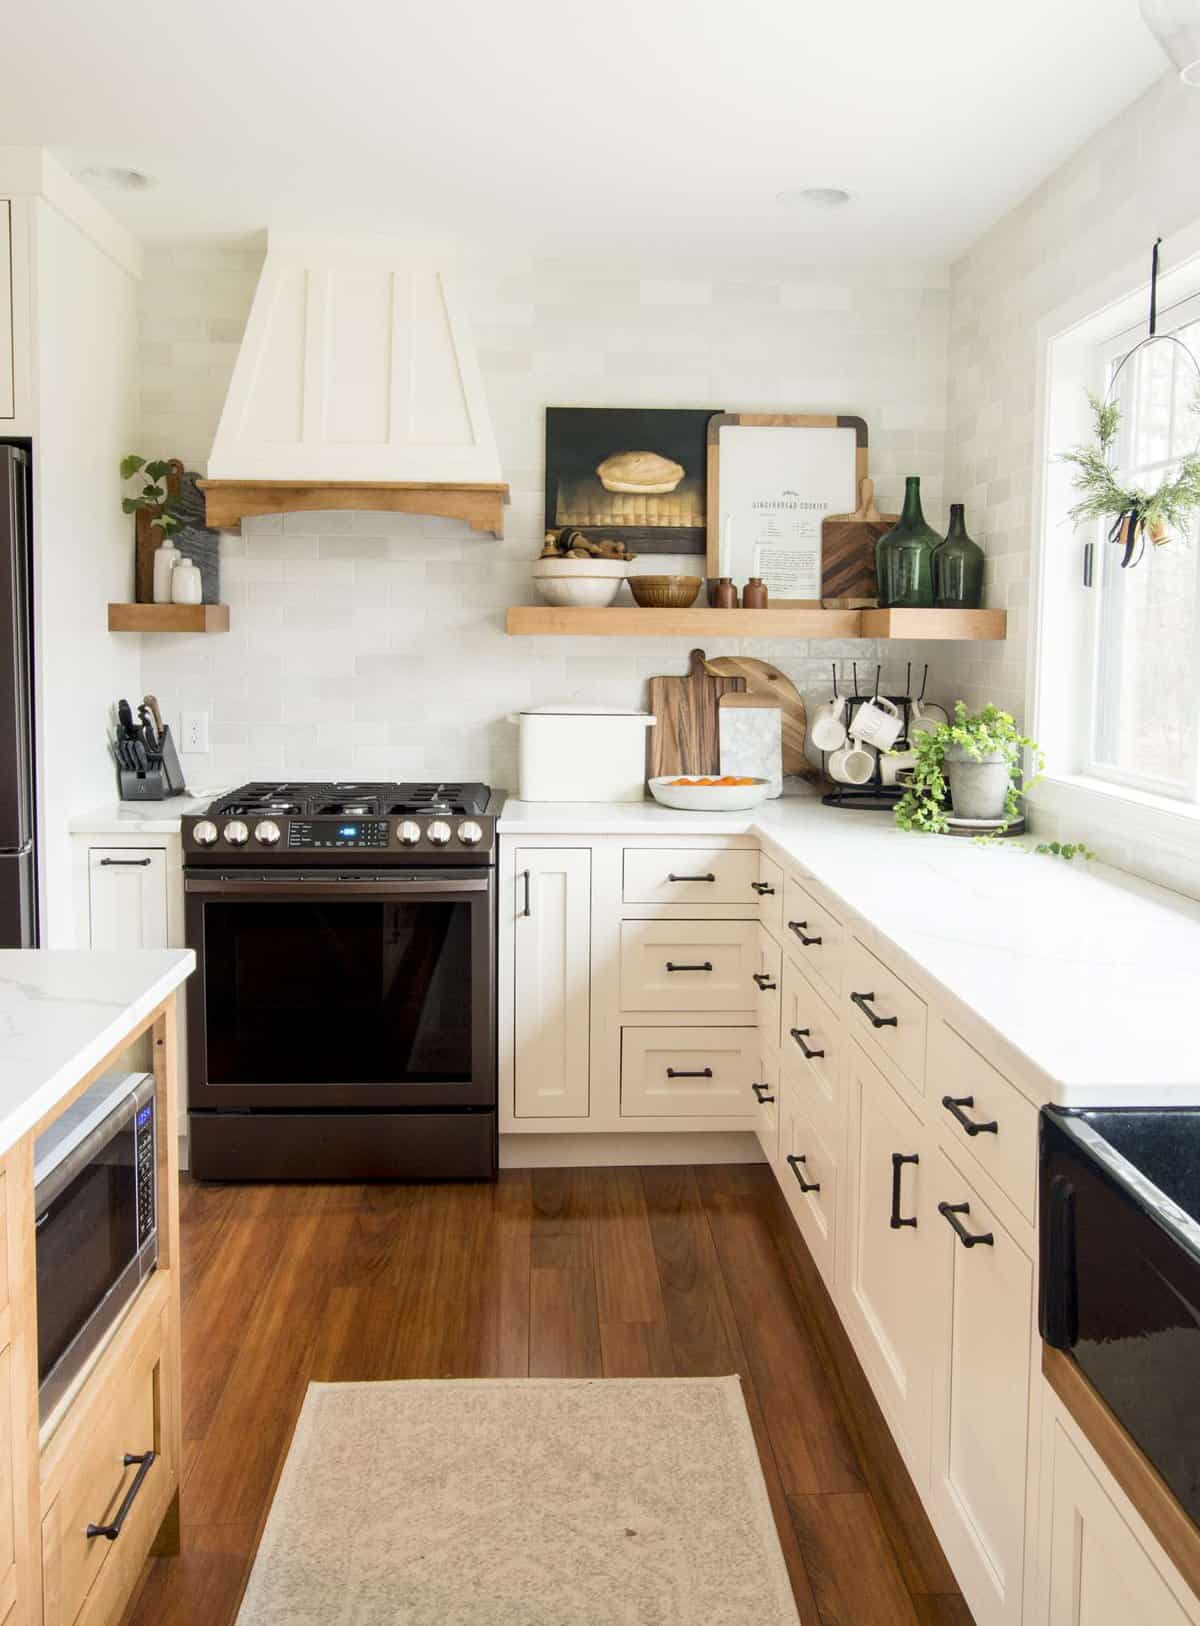 Open shelving in a modern farmhouse kitchen design.